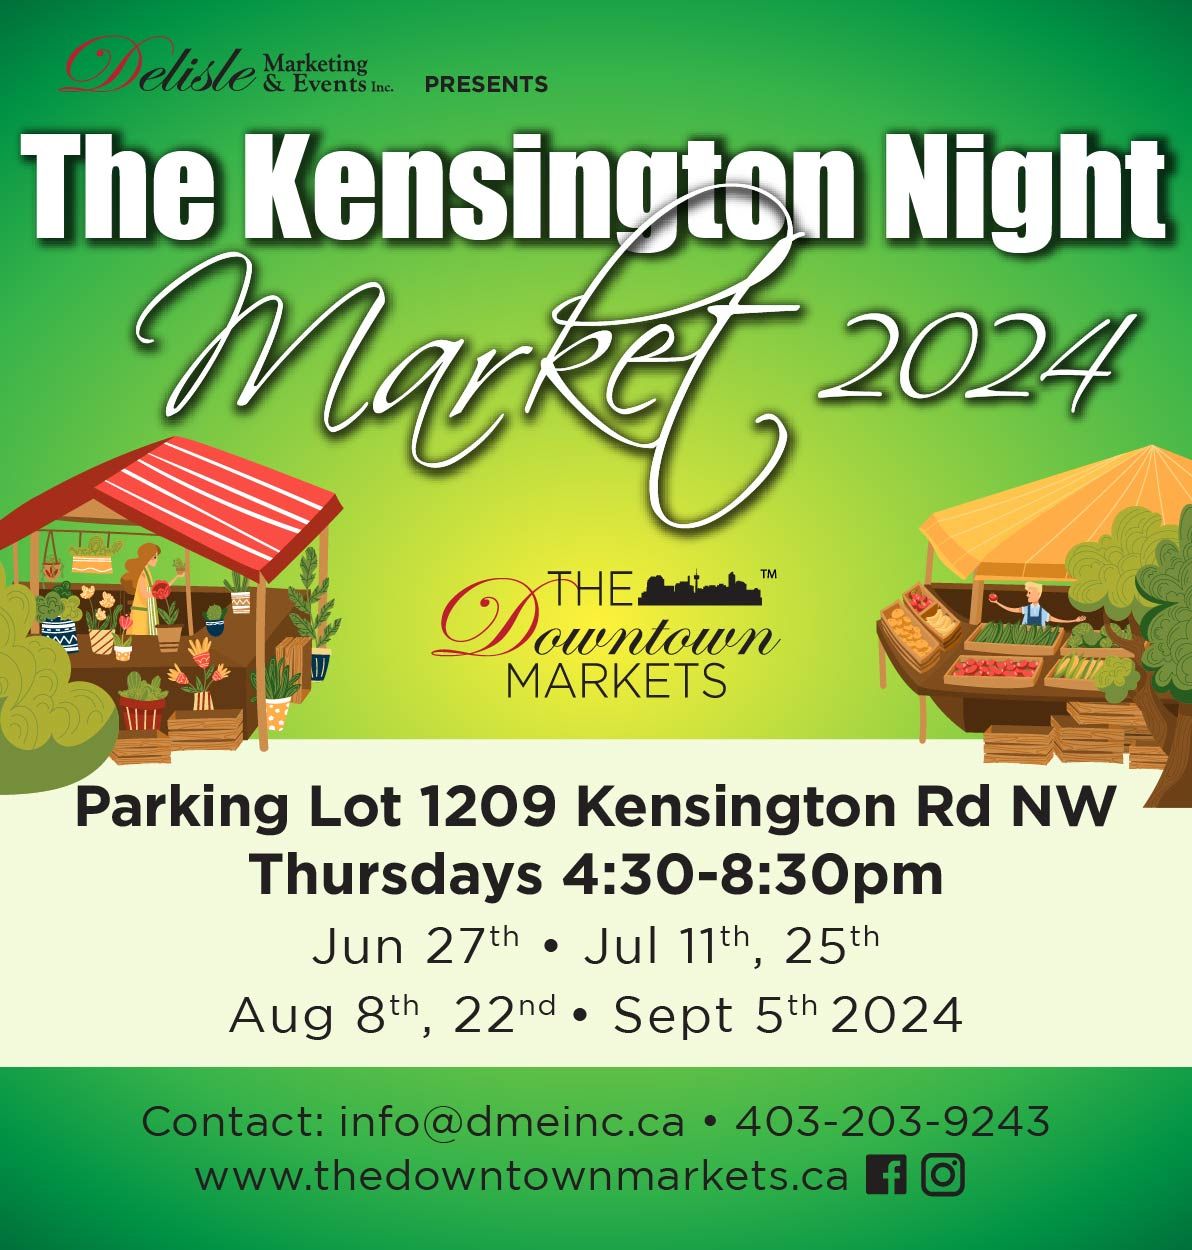 The Kensington Night Market 